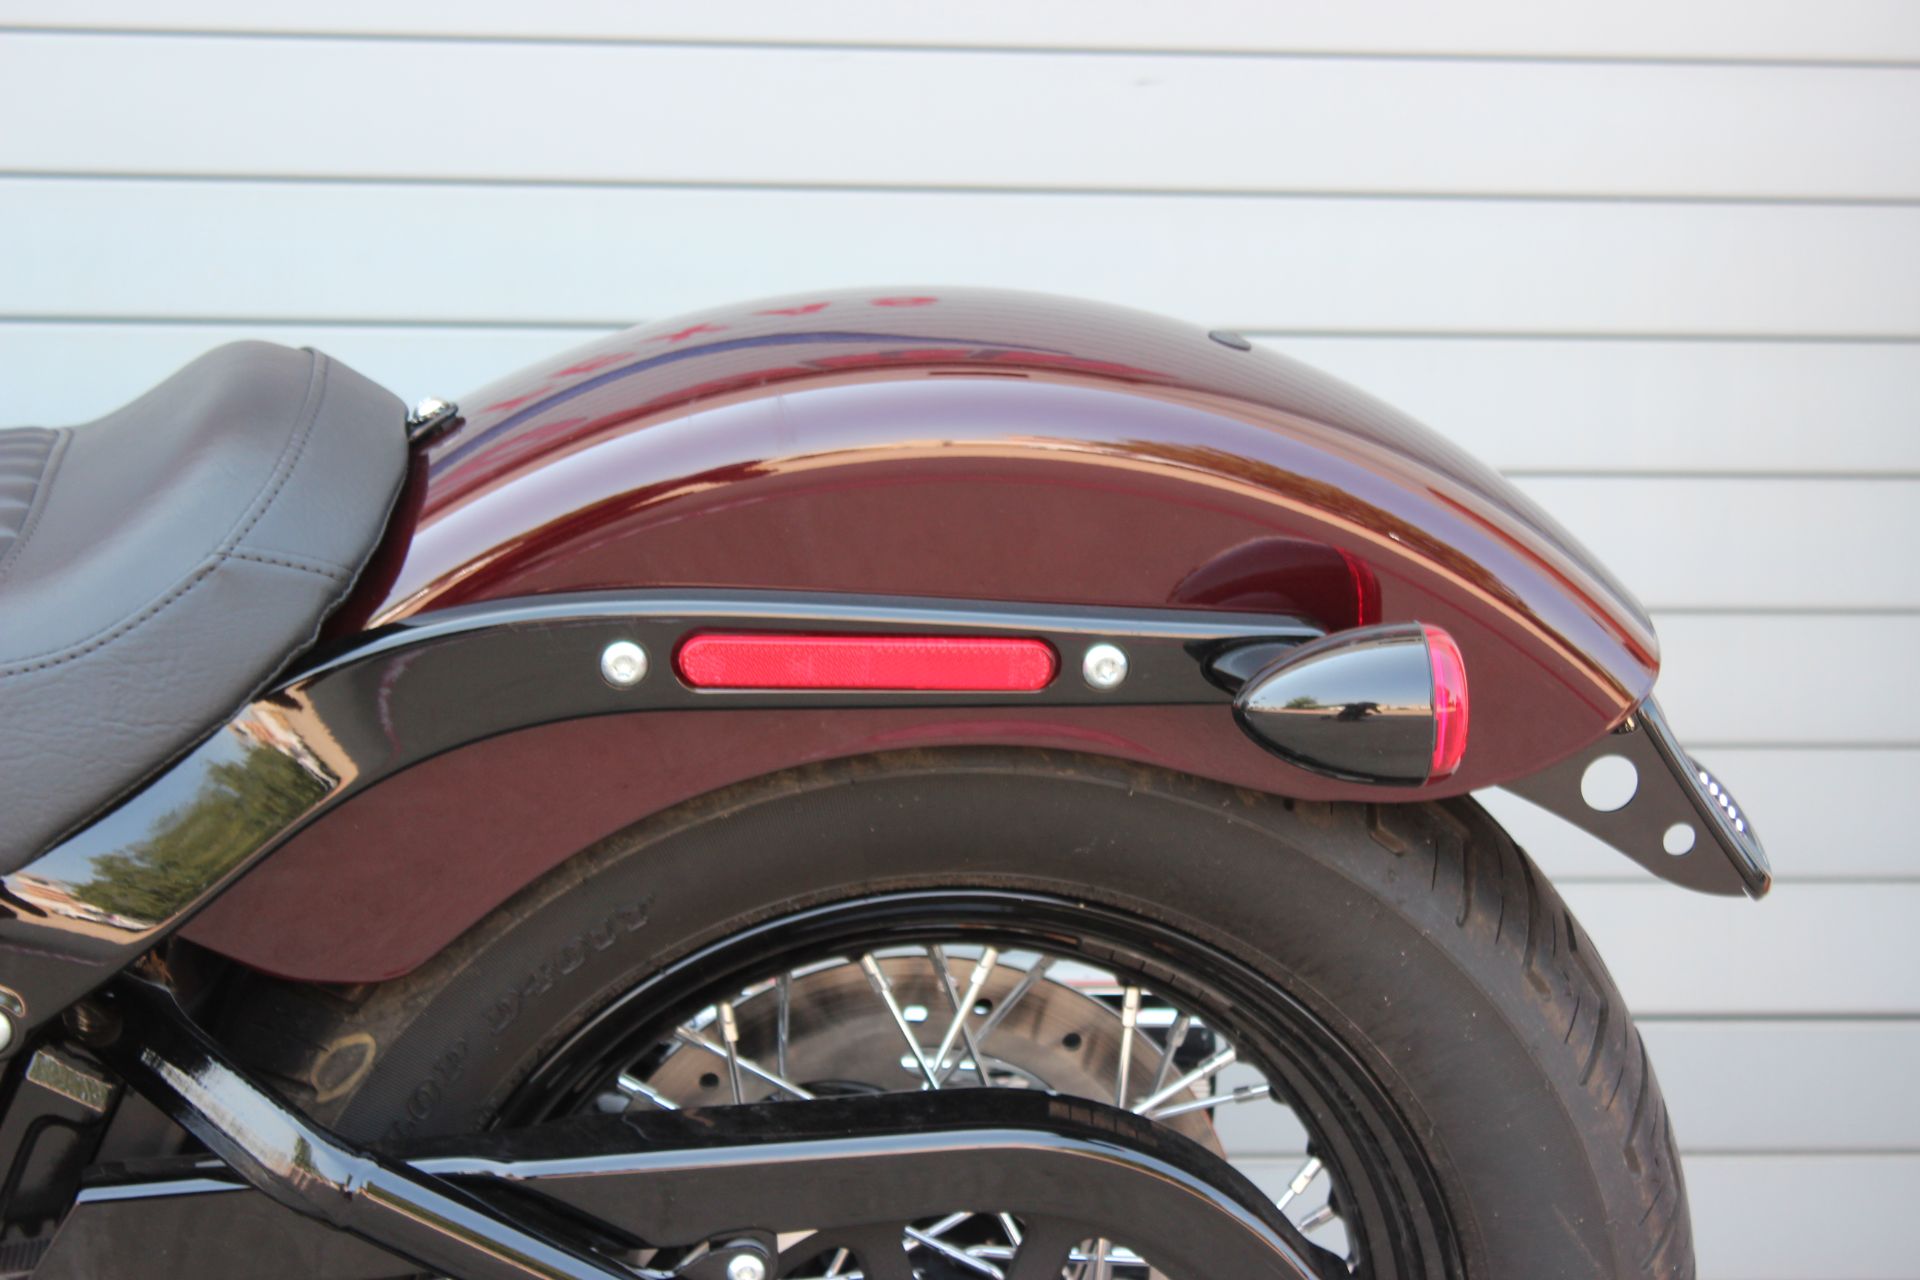 2021 Harley-Davidson Softail Slim® in Grand Prairie, Texas - Photo 20